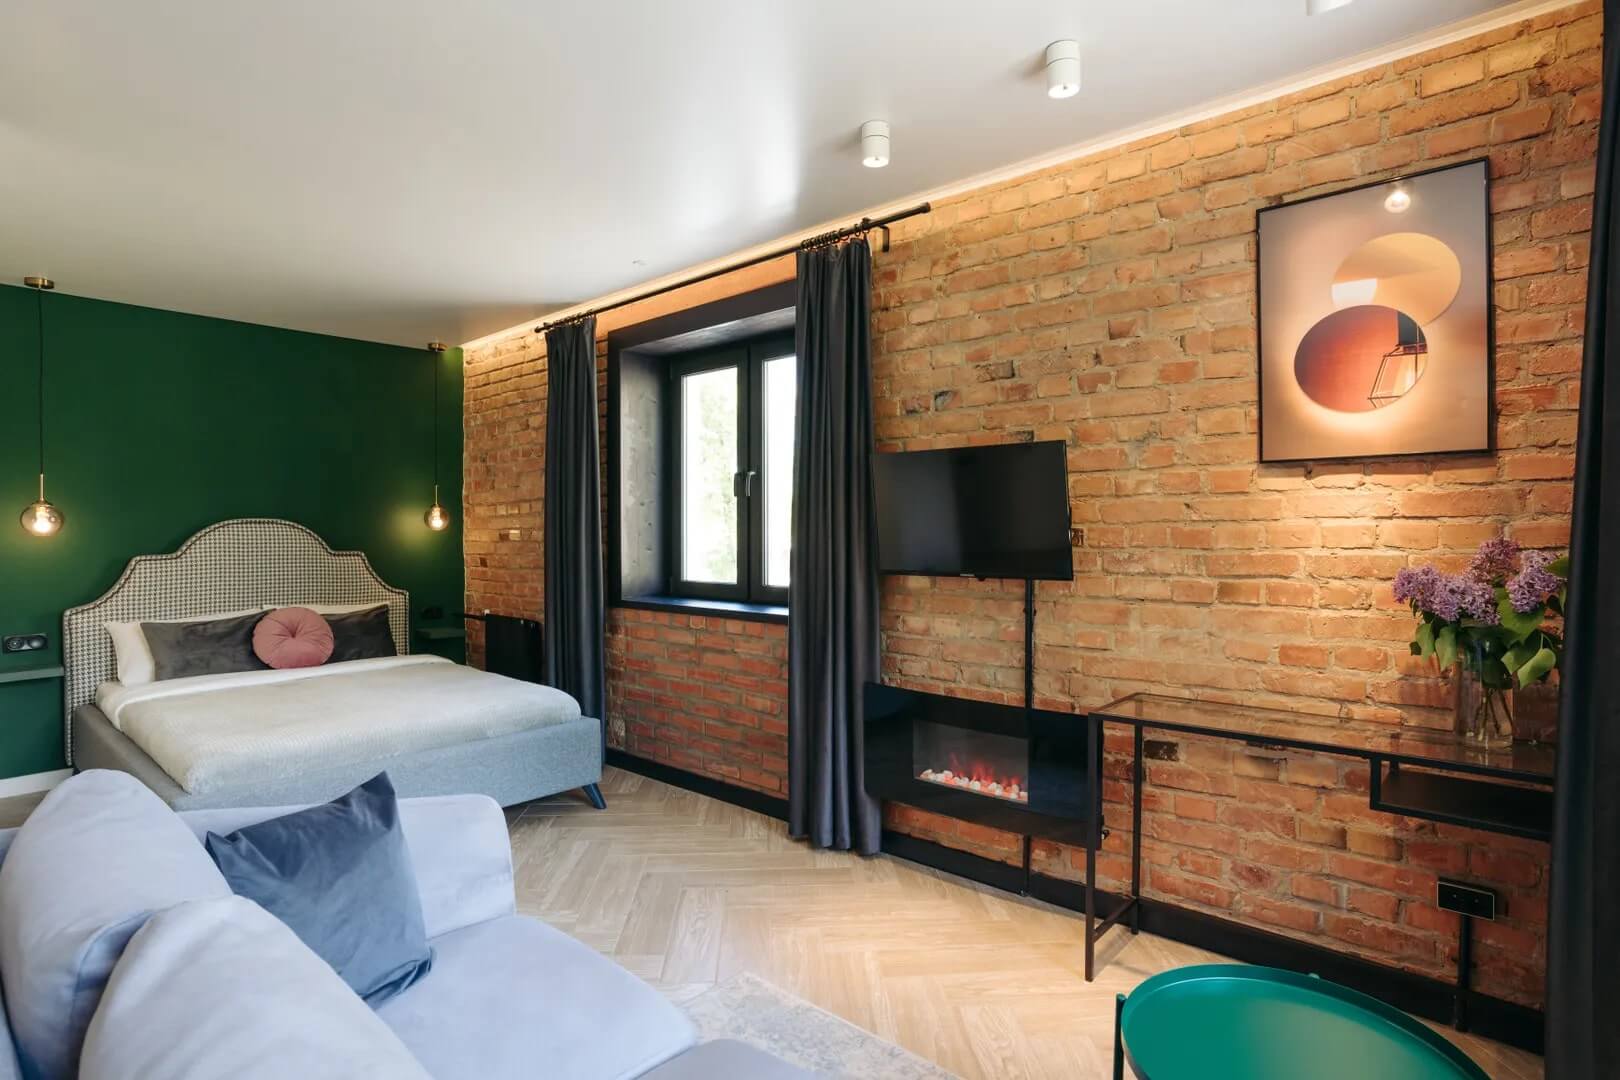 Стена у кровати - зеленого цвета, стена у камина - красный кирпич.